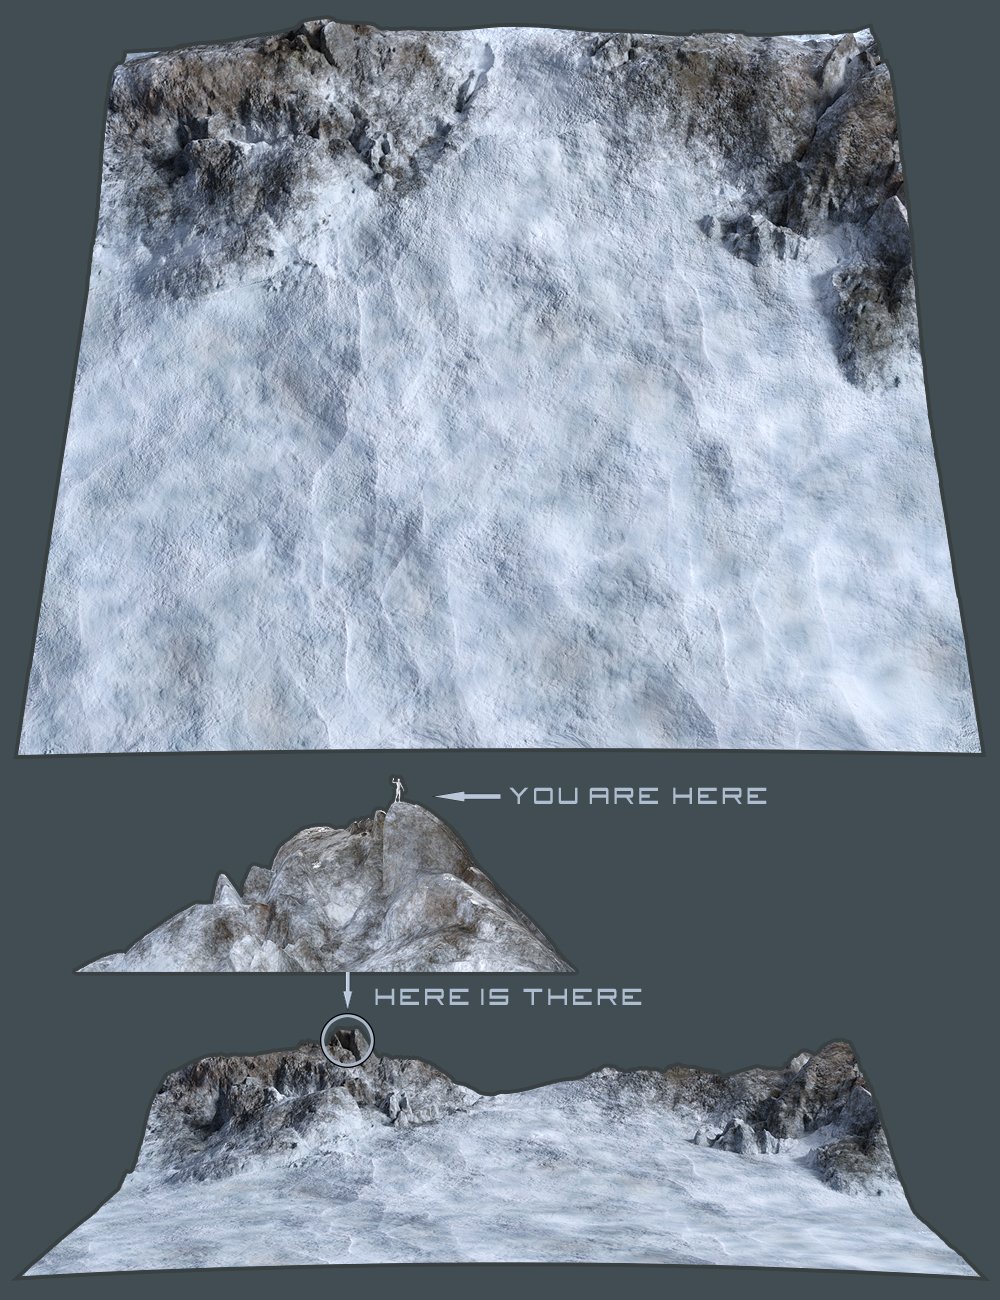 Frost Zone Mining by: The AntFarm, 3D Models by Daz 3D